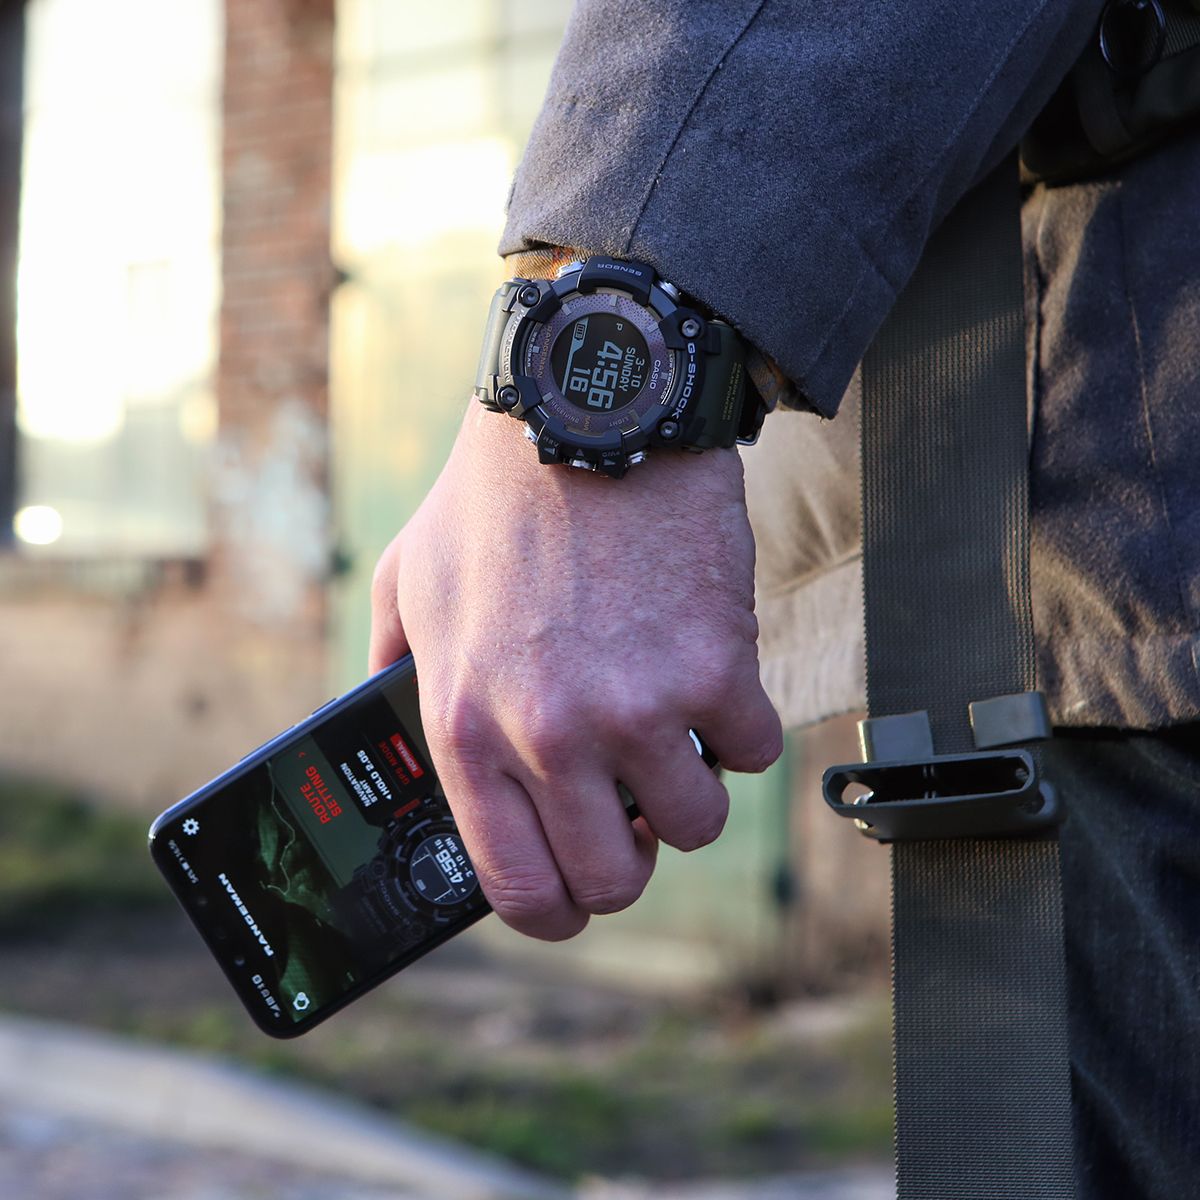 Casio G-SHOCK Rangeman GPS Bluetooth Solar Watch